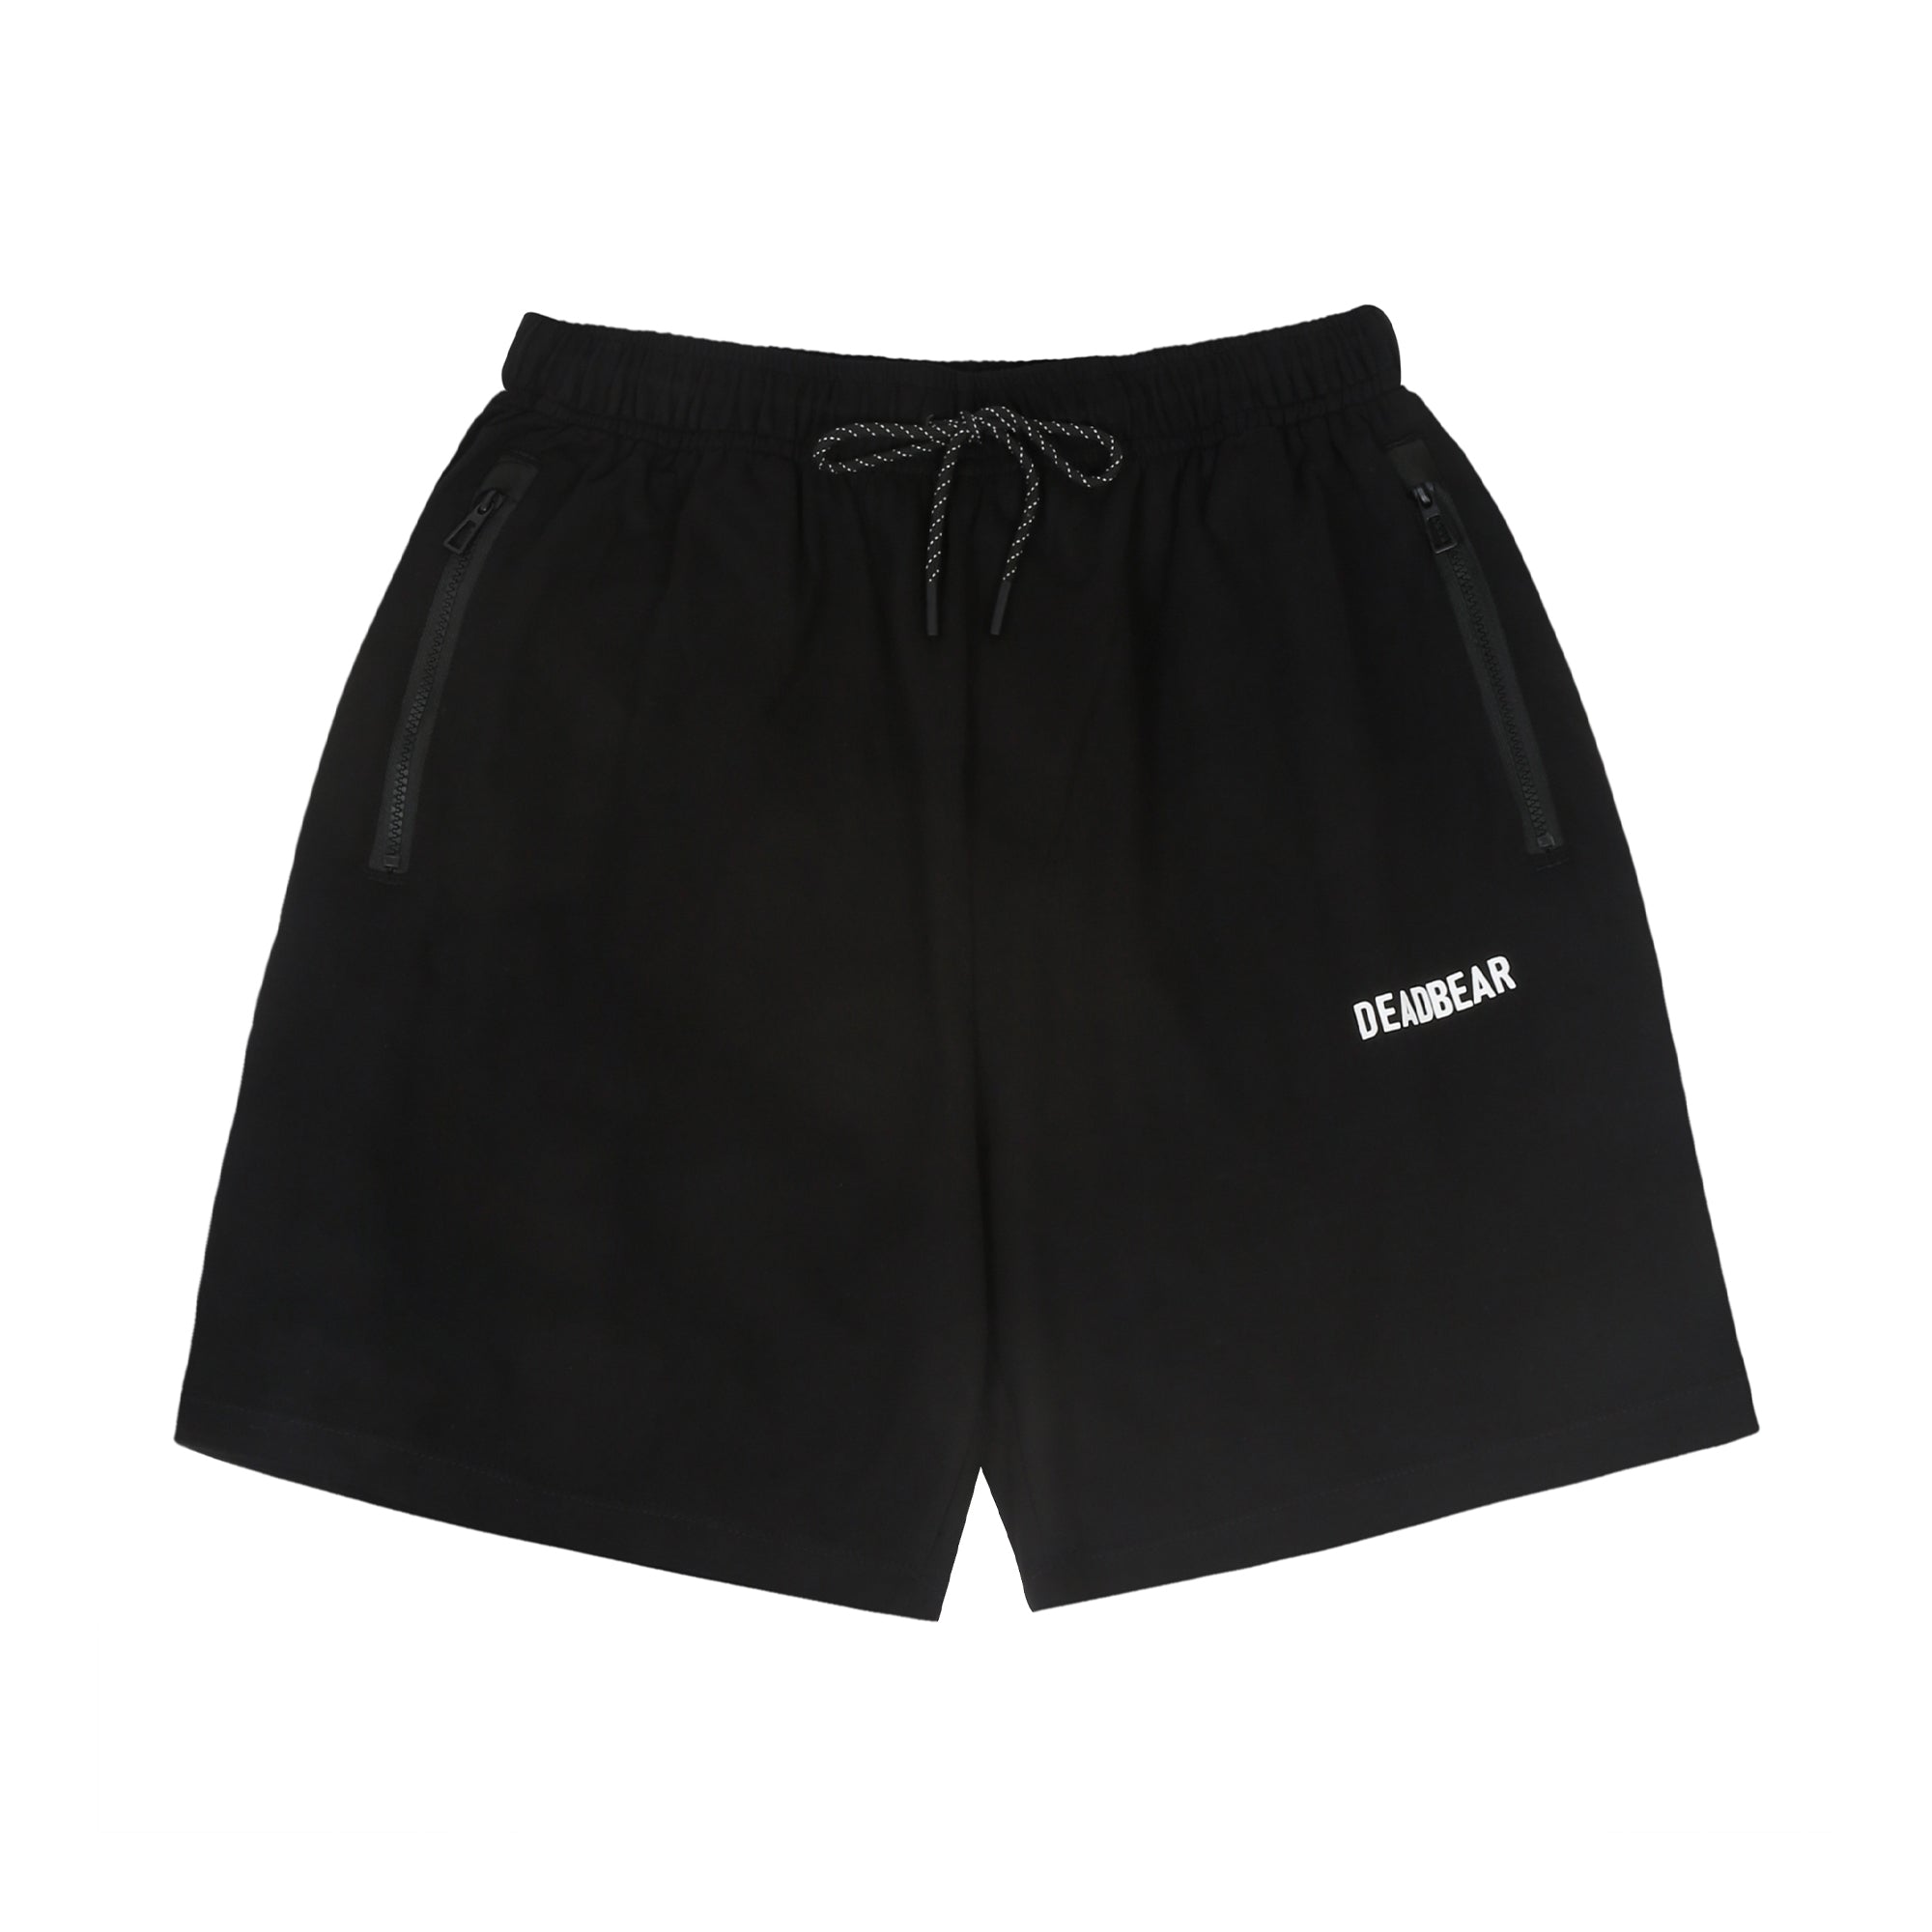 Basic Black Shorts